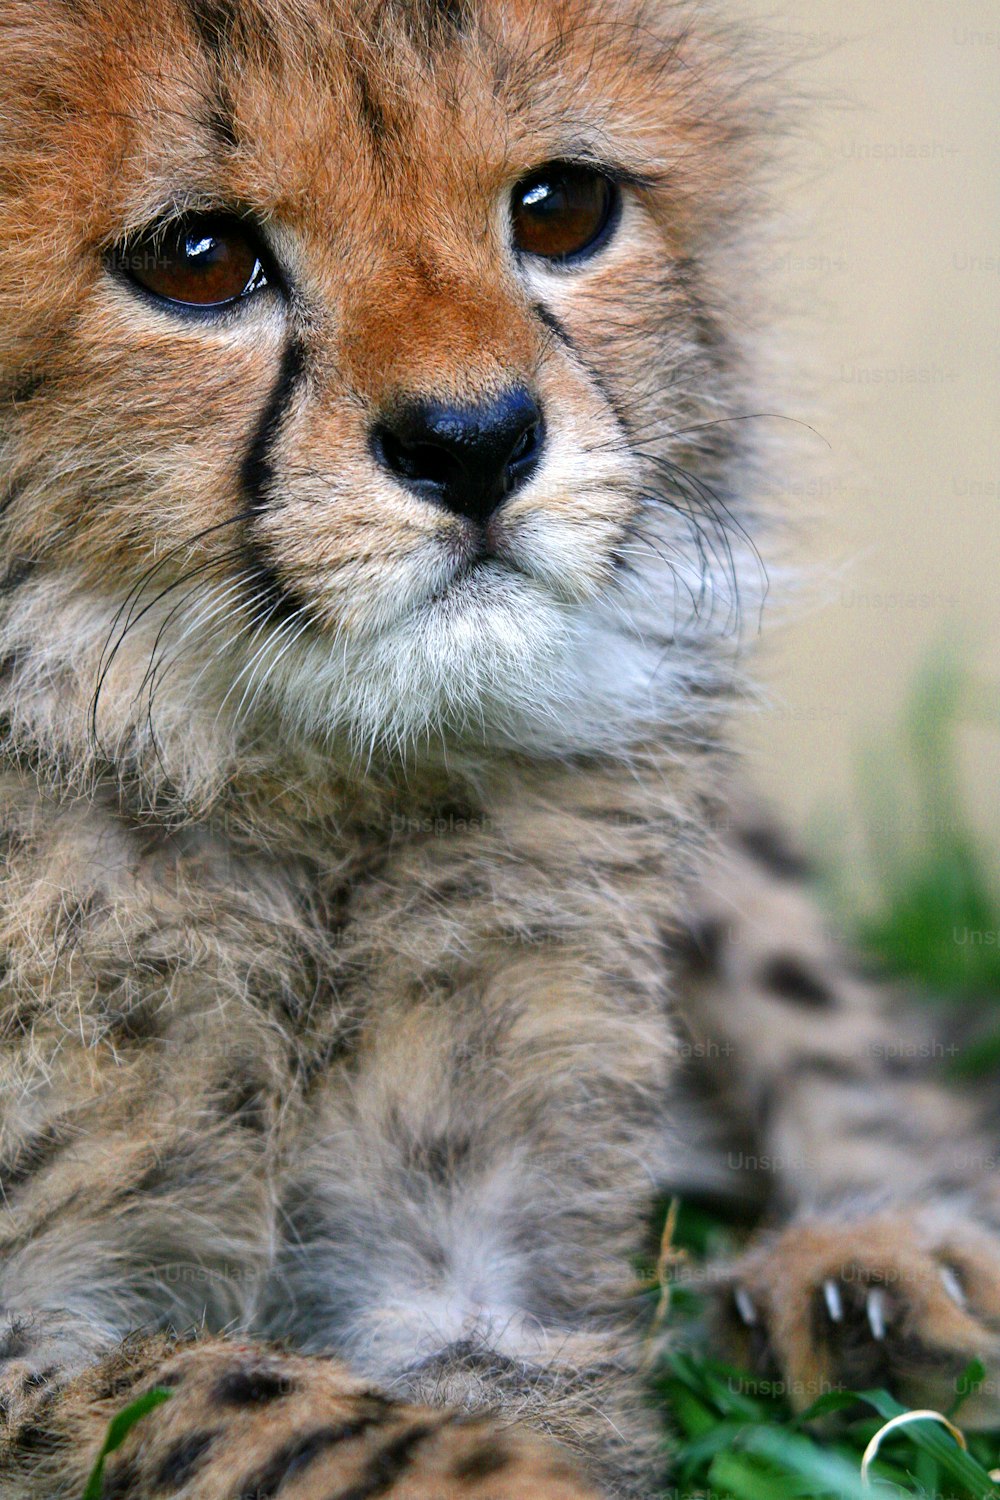 Baby cheetah face photo – Cheetah Image on Unsplash